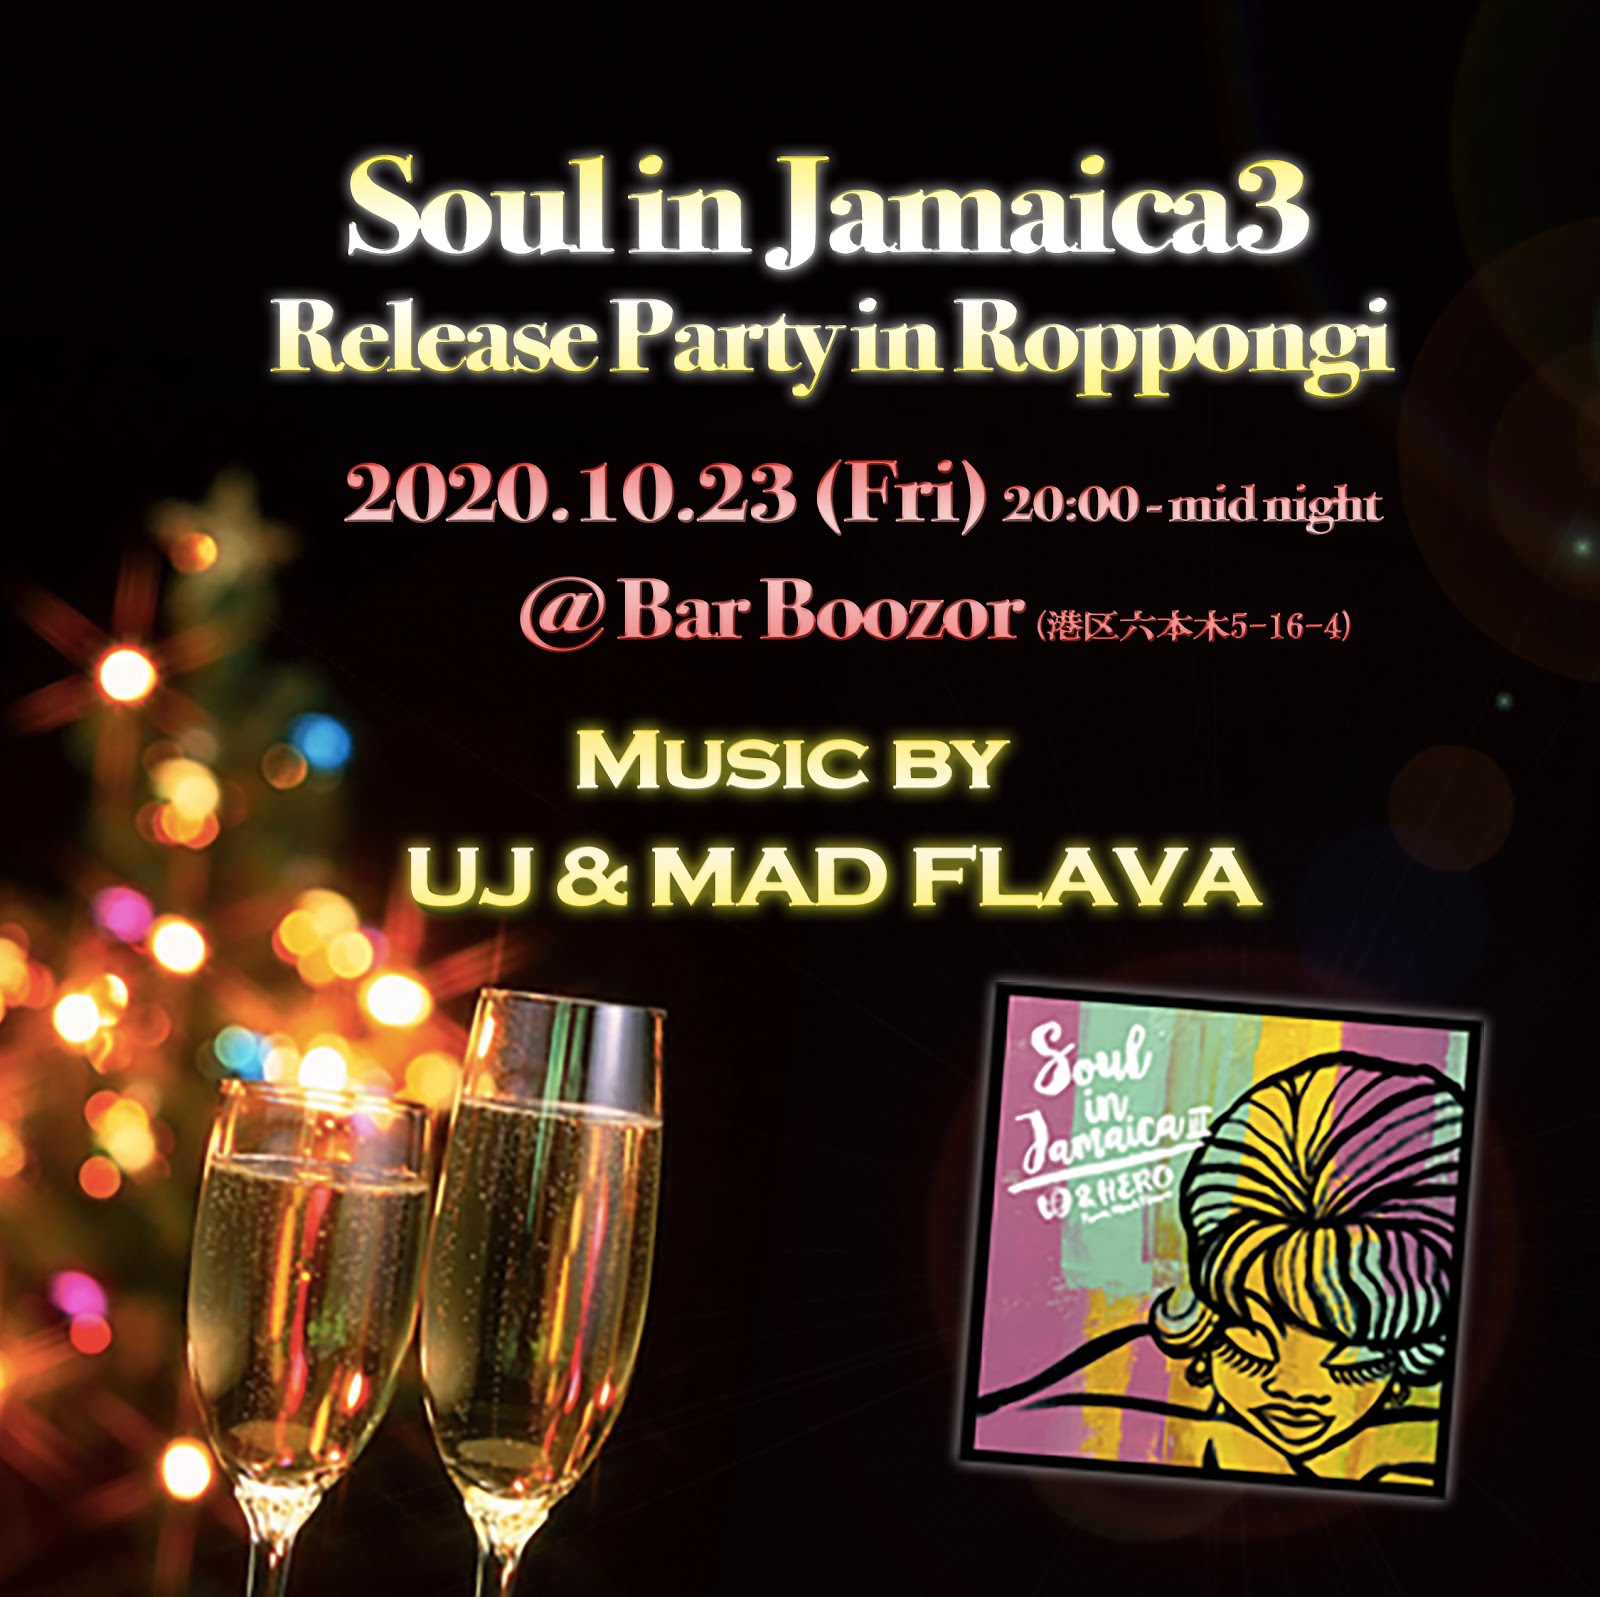 2020/10/23/Fri-Soul in Jamaica Release Party in Roppongi